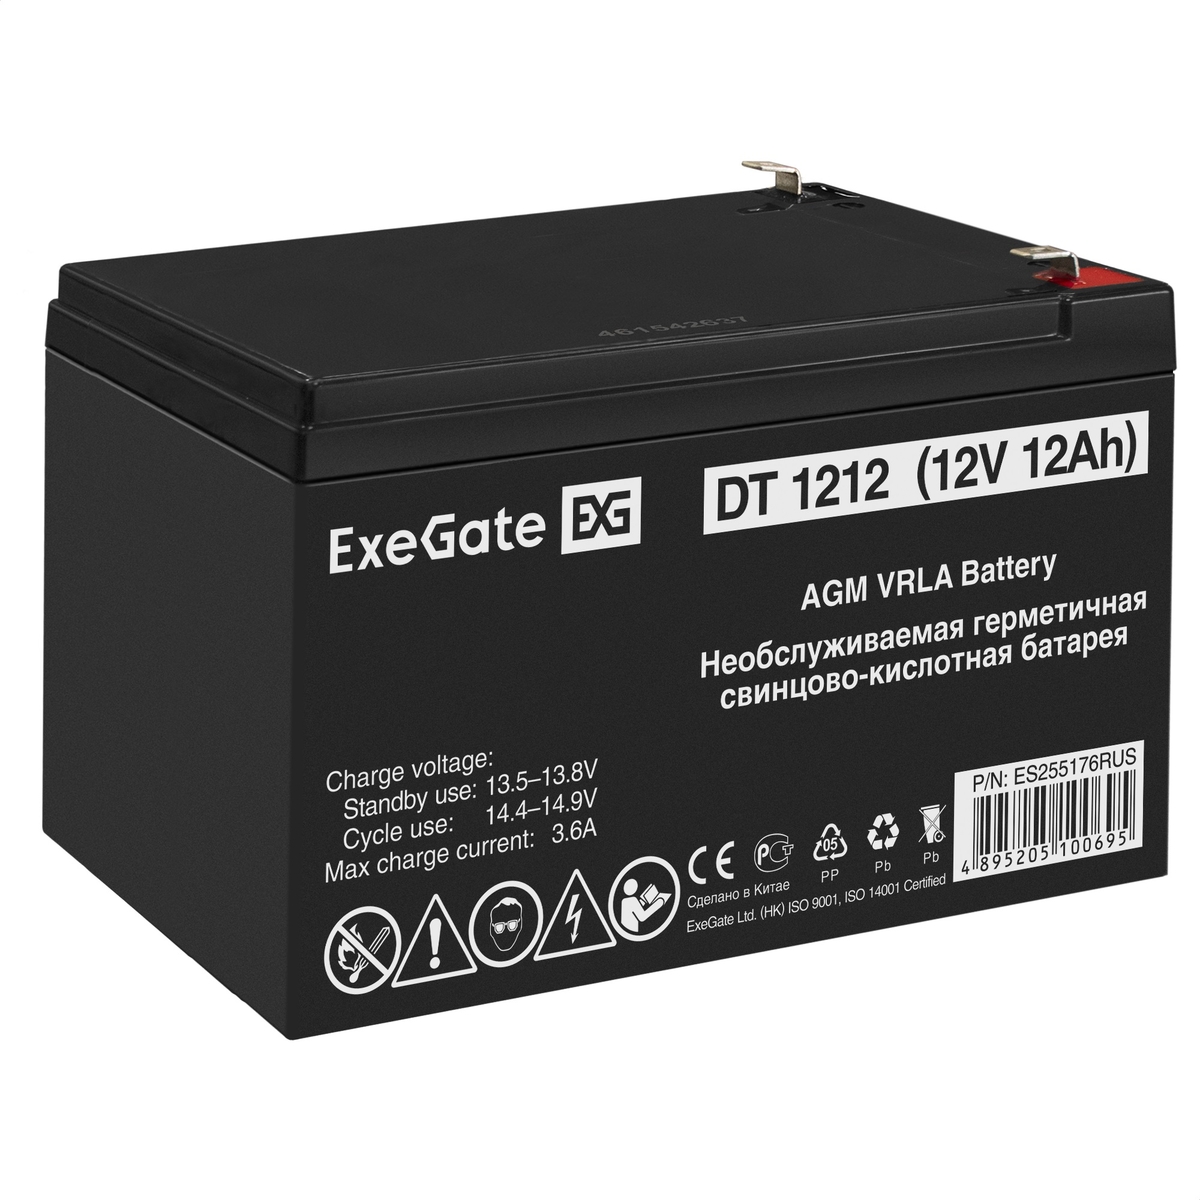 Battery ExeGate DT 1212